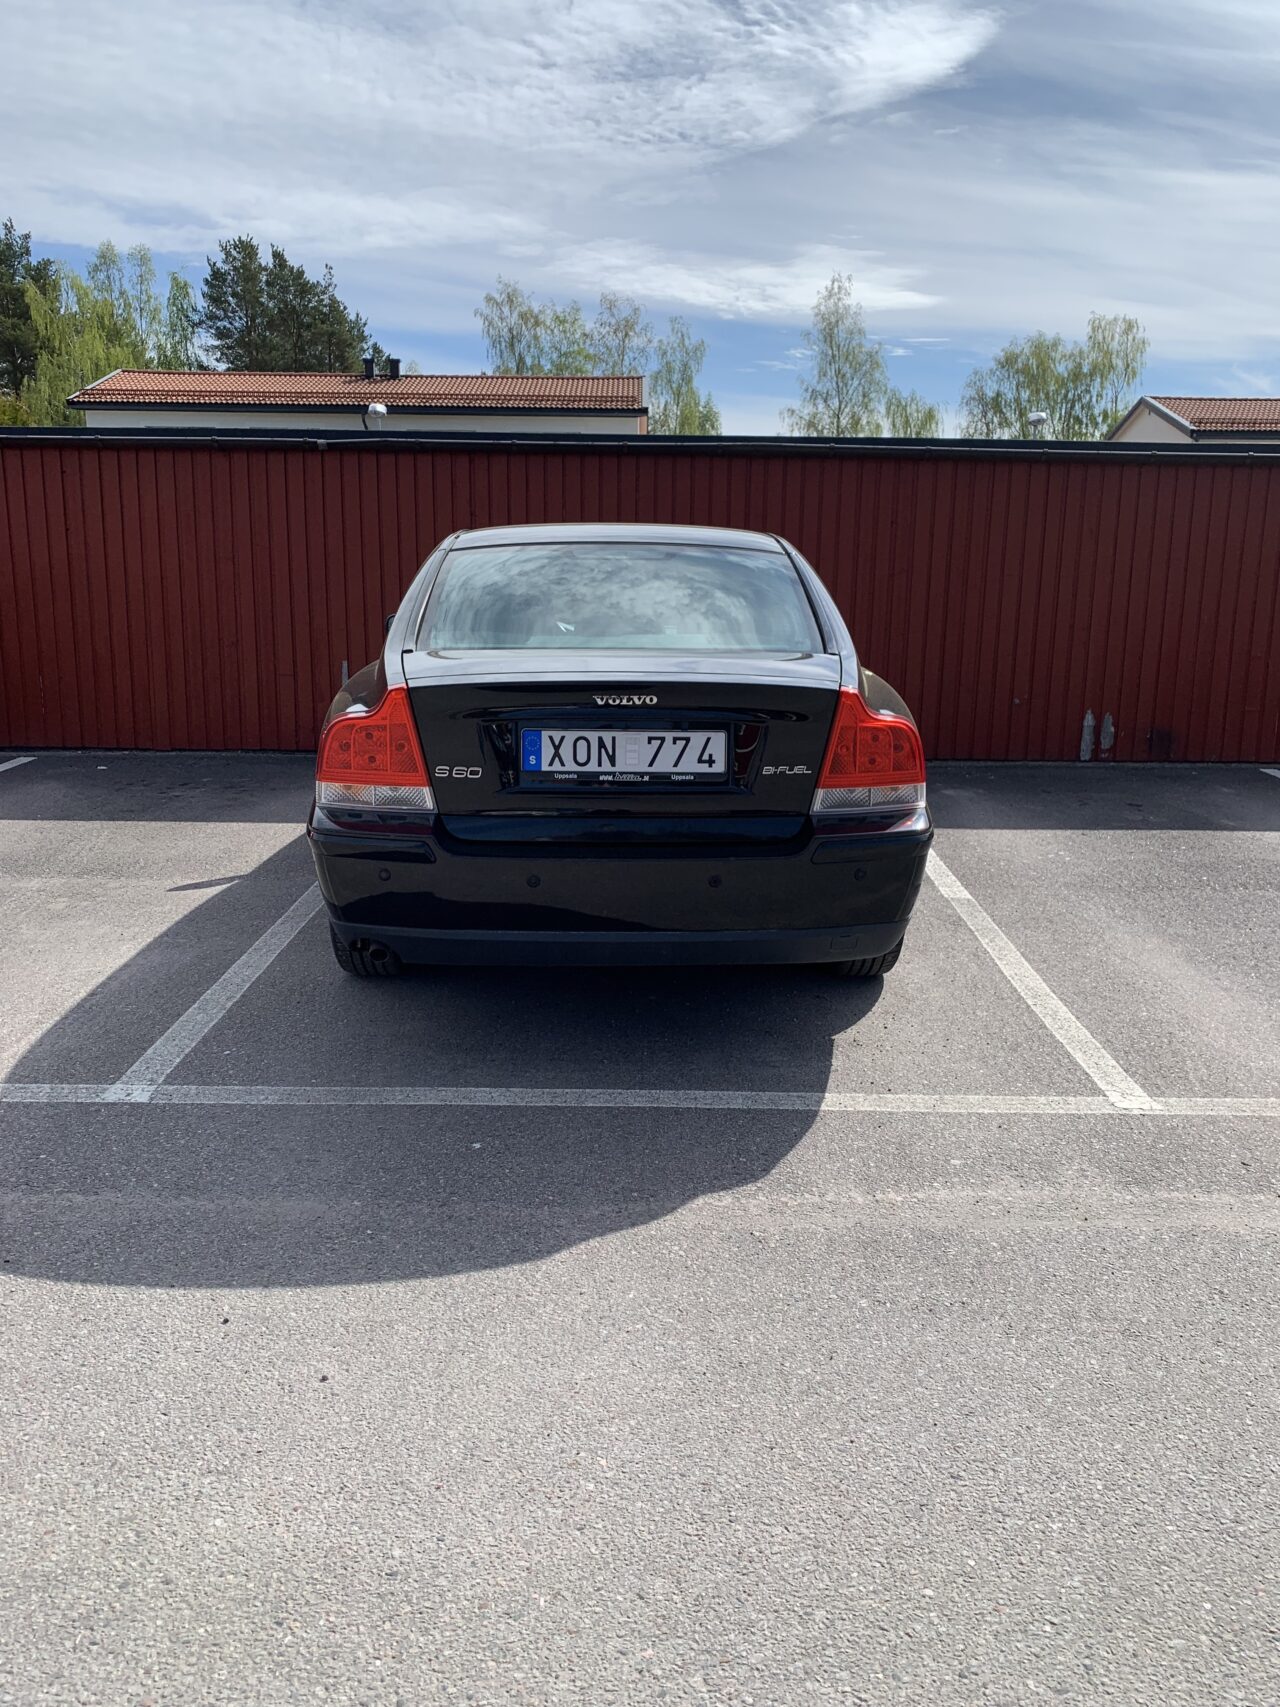 Parked Black Volvo S60 On Parking Lot